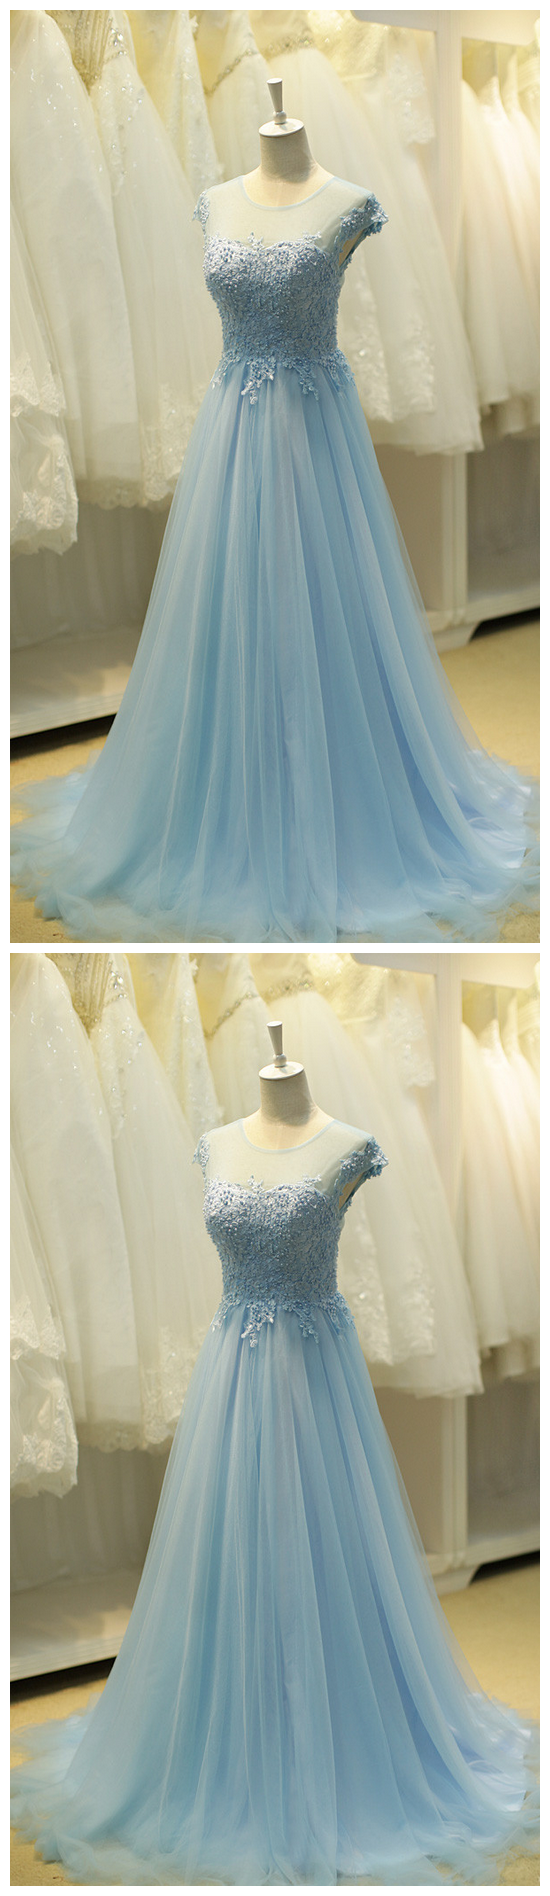 Elegant Prom Dresses, A Line Blue Evening Dress, Beaded Prom Dress, Wedding Guest Dress, Bridesmaid Dress